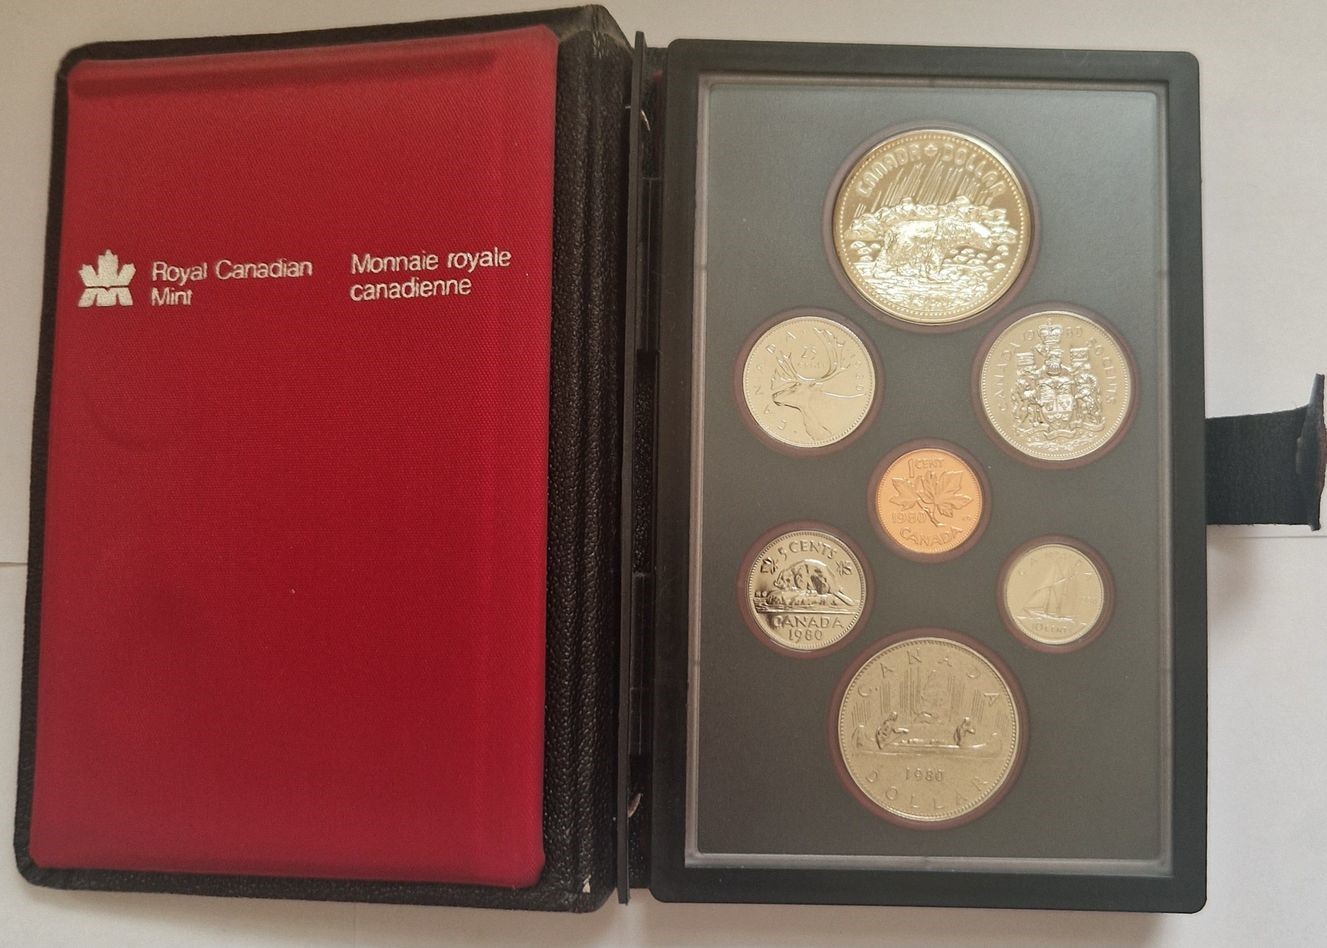  Kanada KMS 1980 1 Cent -1 Dollar Royal Canadian Mint Münzenankauf Koblenz Frank Maurer AD137   